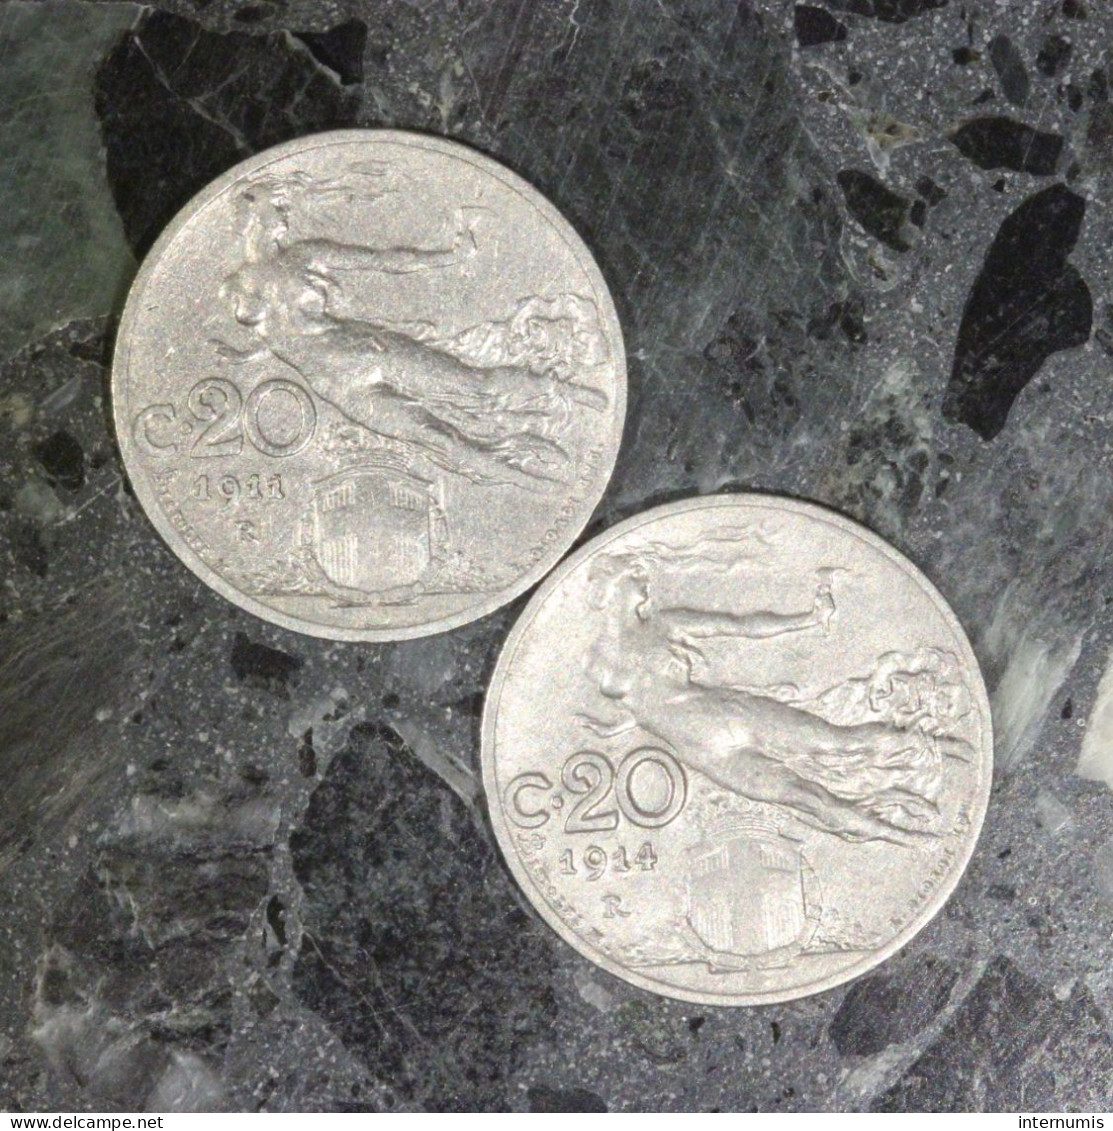 LOT (2) : 2 Centesimi 1911-R & 1914-R Italie / Italy, , 20 Centesimi , 1911 & 1914, , Nickel, ,
KM# - Lots & Kiloware - Coins